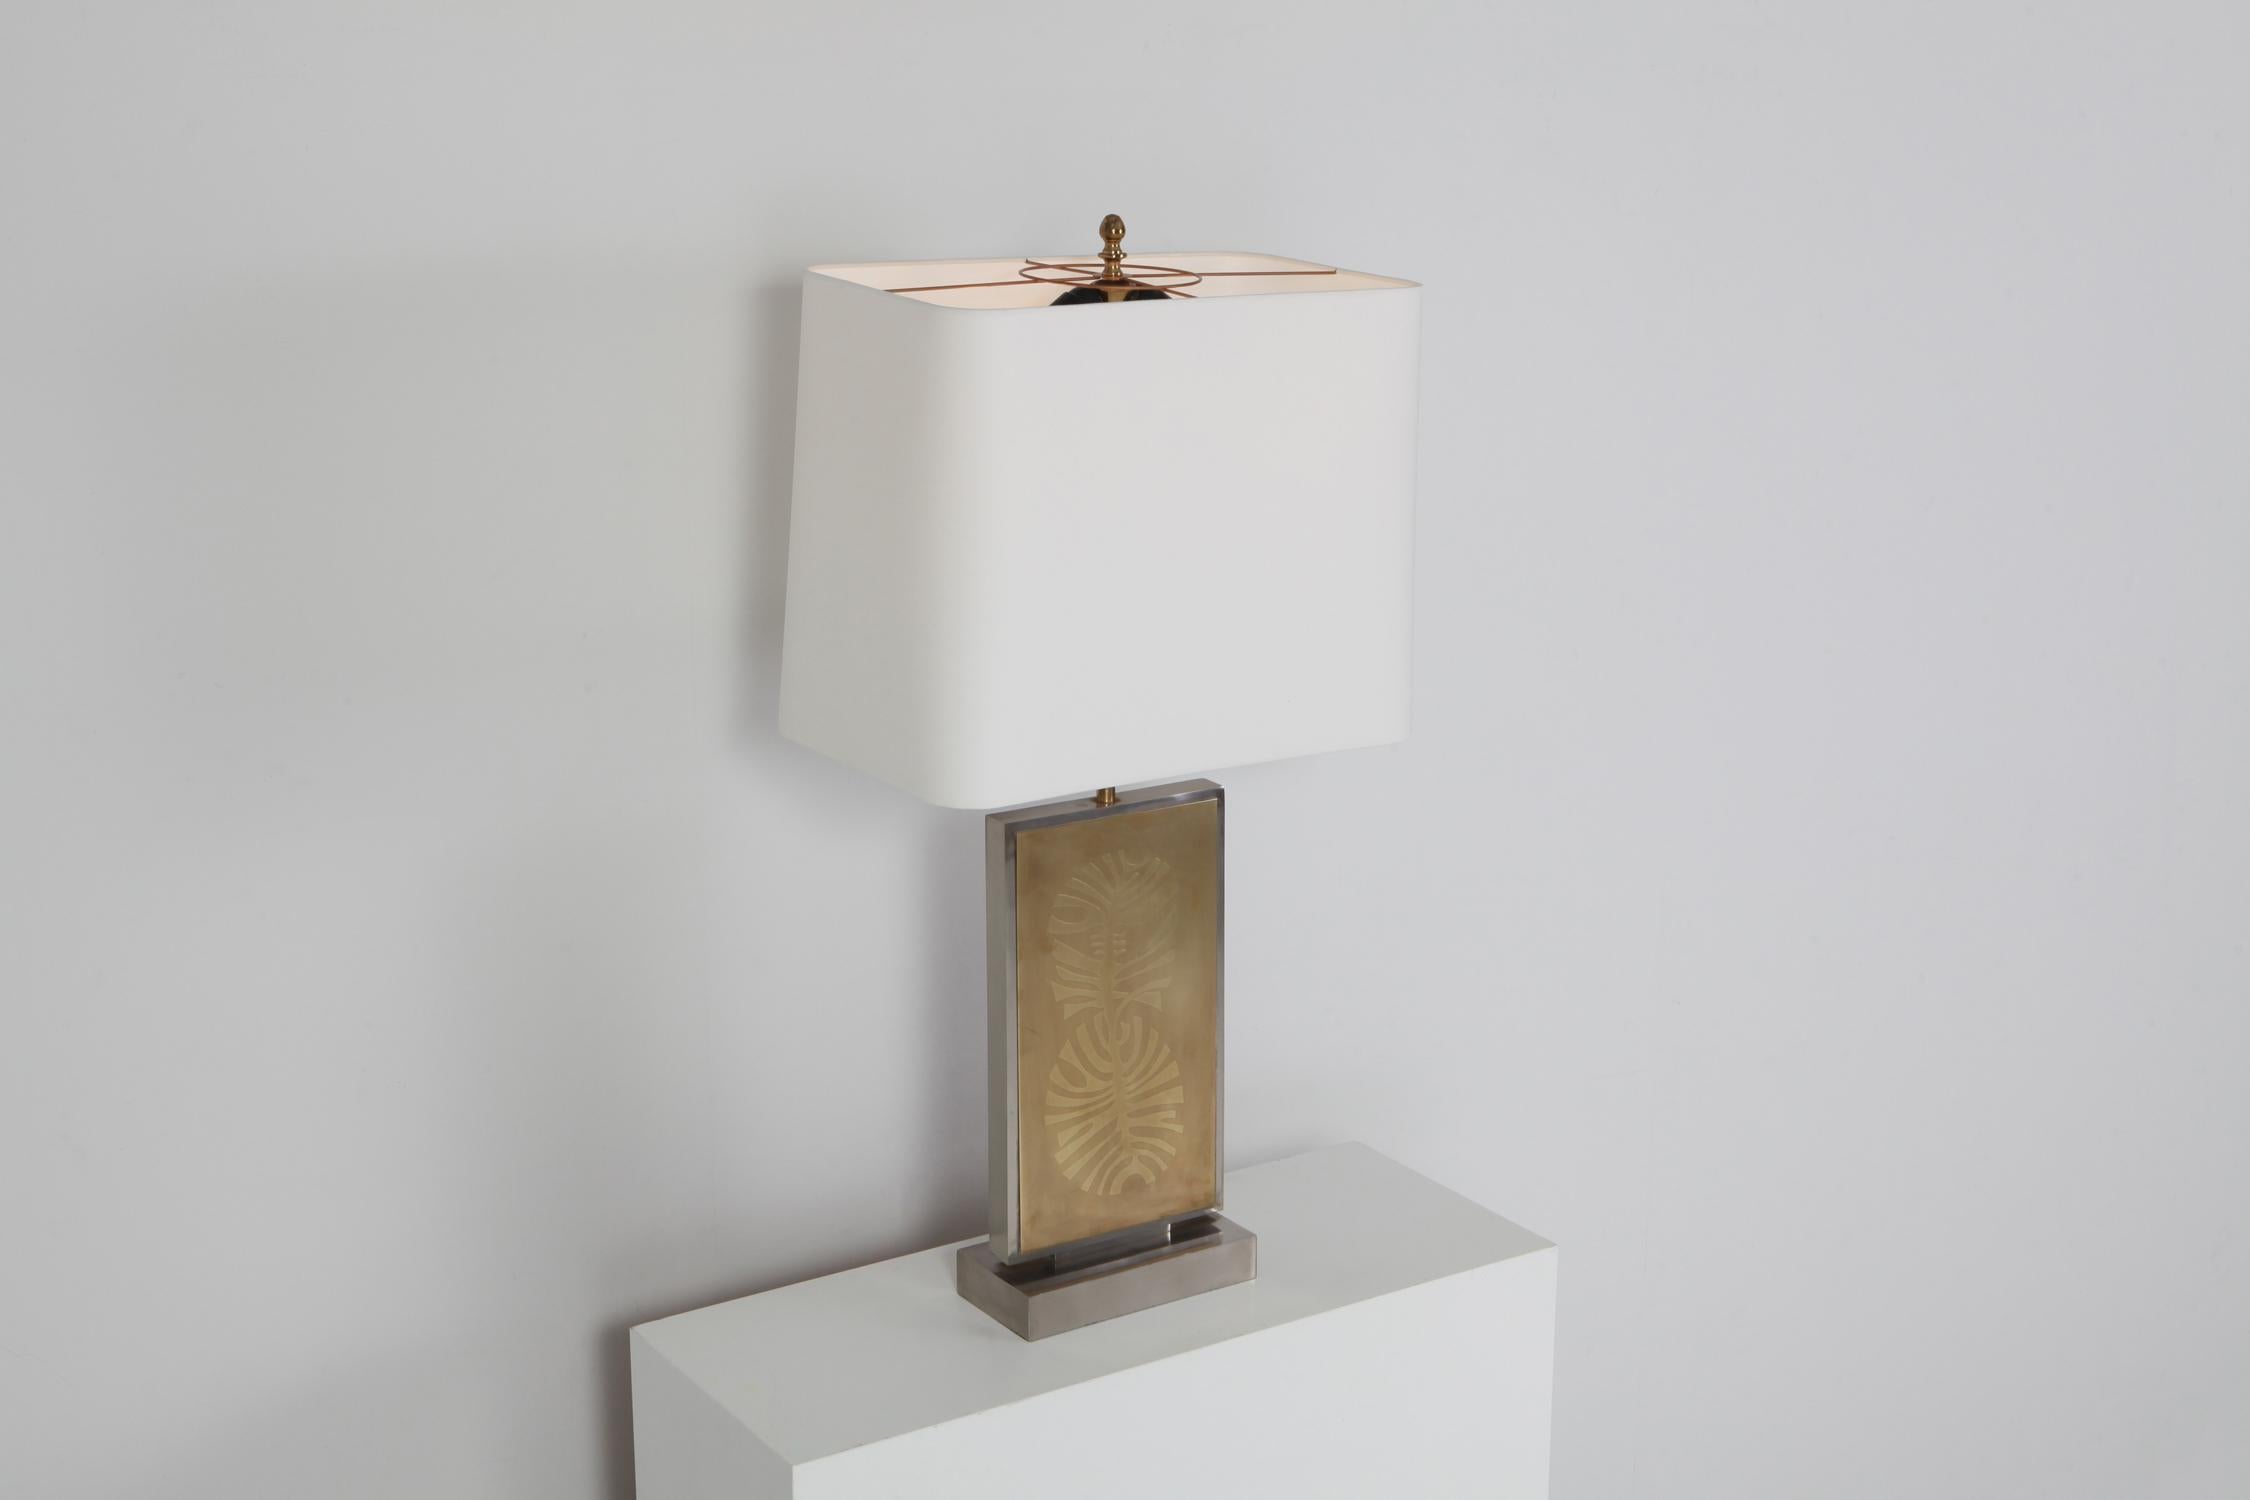 Roger Vanhevel Brass Etched Impressive Table Lamp, Post-modern, 1970s For Sale 2